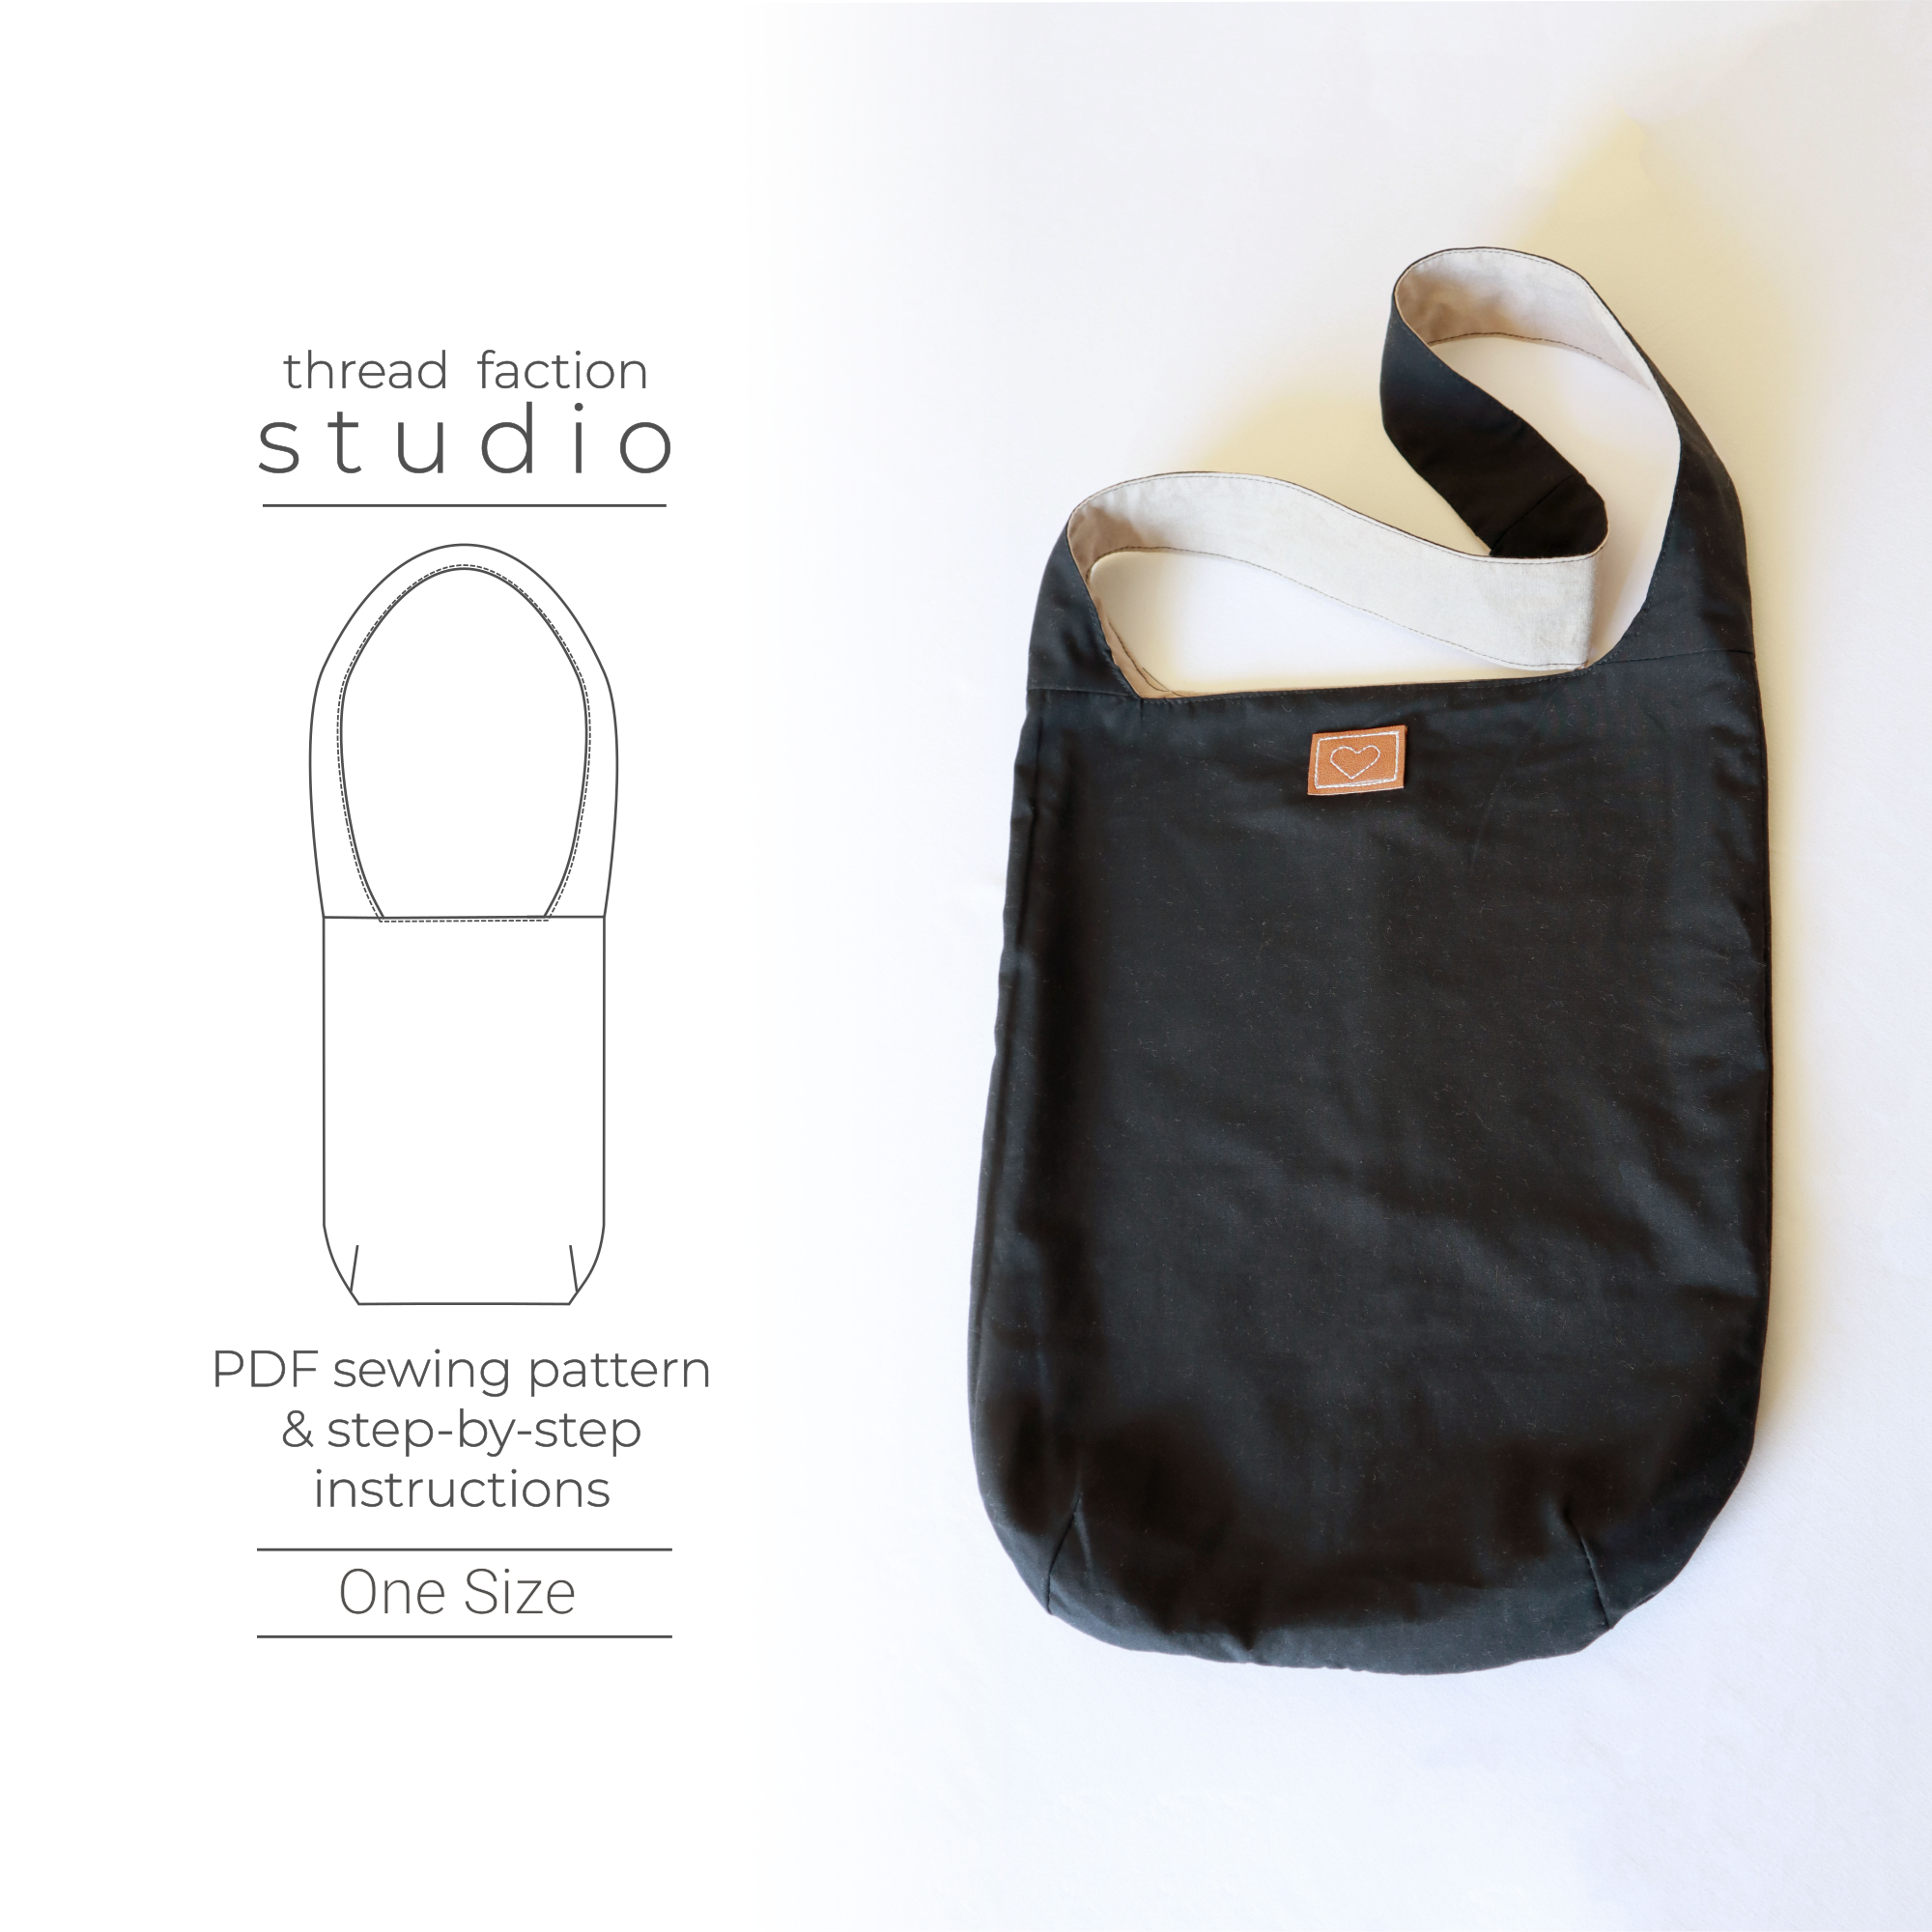 The Zero Waste Shoulder Bag – Thread Faction Studio